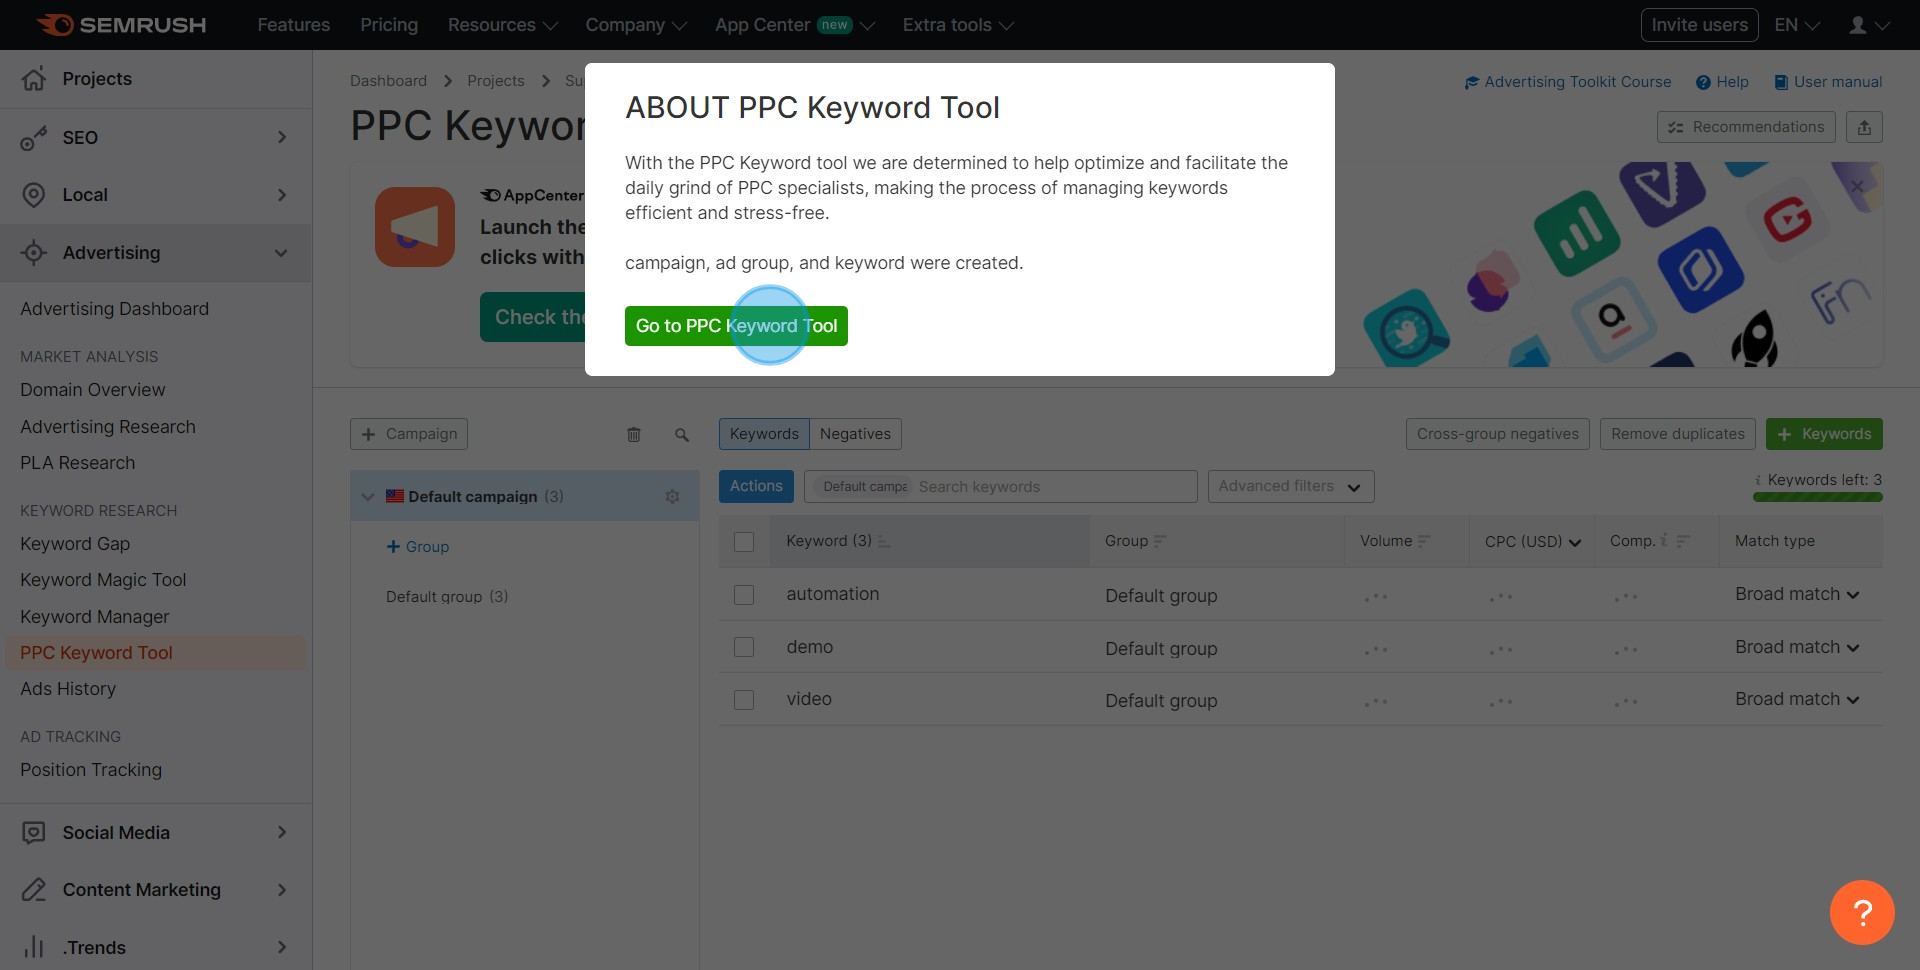 10 Click on "Go to PPC Keyword Tool"